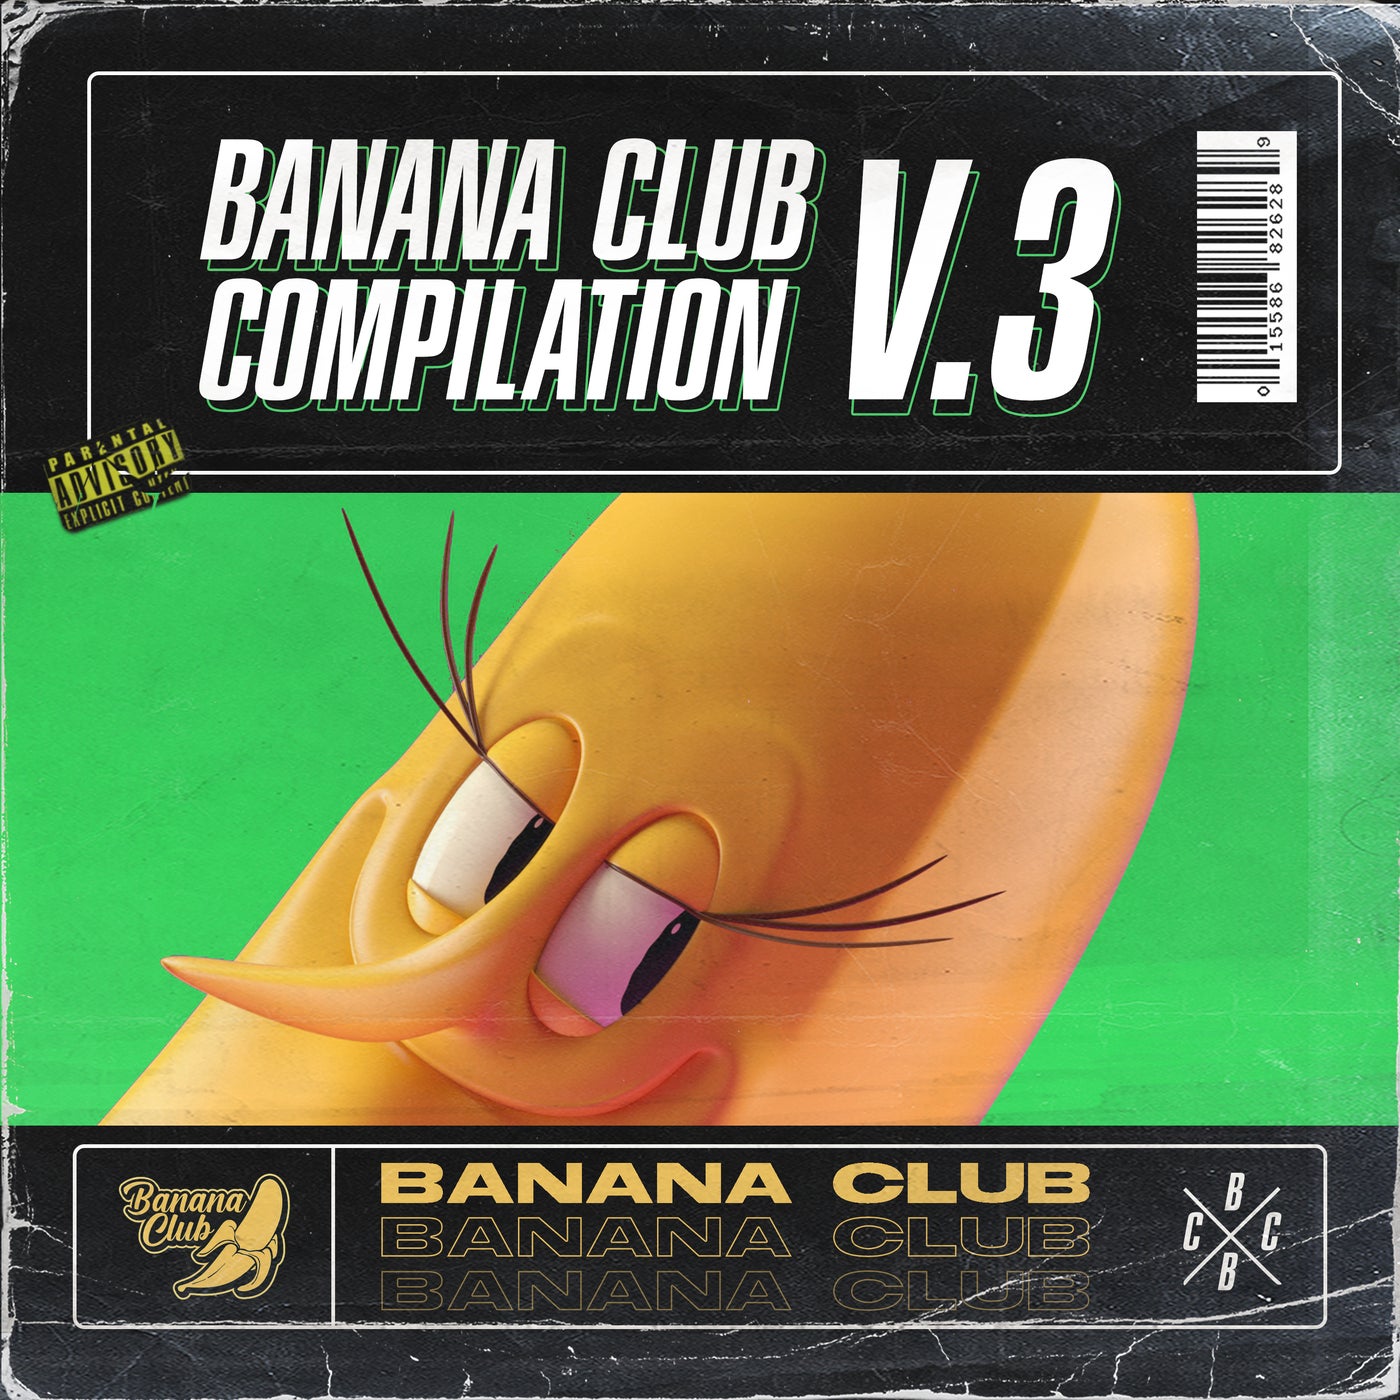 Banana Club Compilation V.3